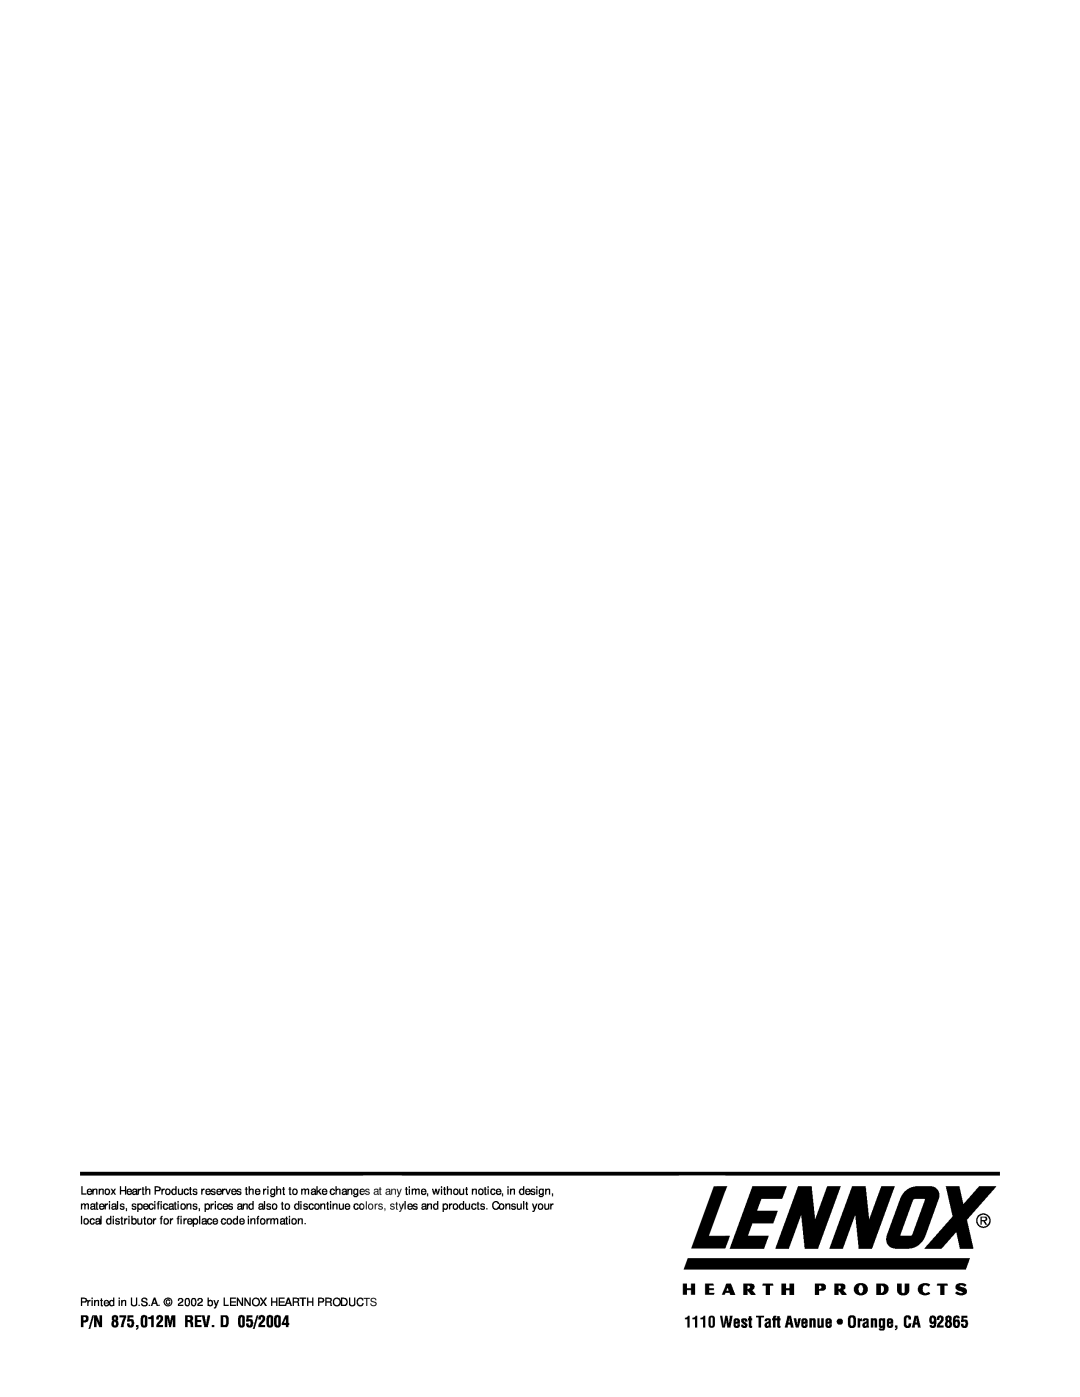 Lennox Hearth EBSTPM-2, EBSTNM-2 manual P/N 875,012M REV. D 05/2004, West Taft Avenue • Orange, CA 